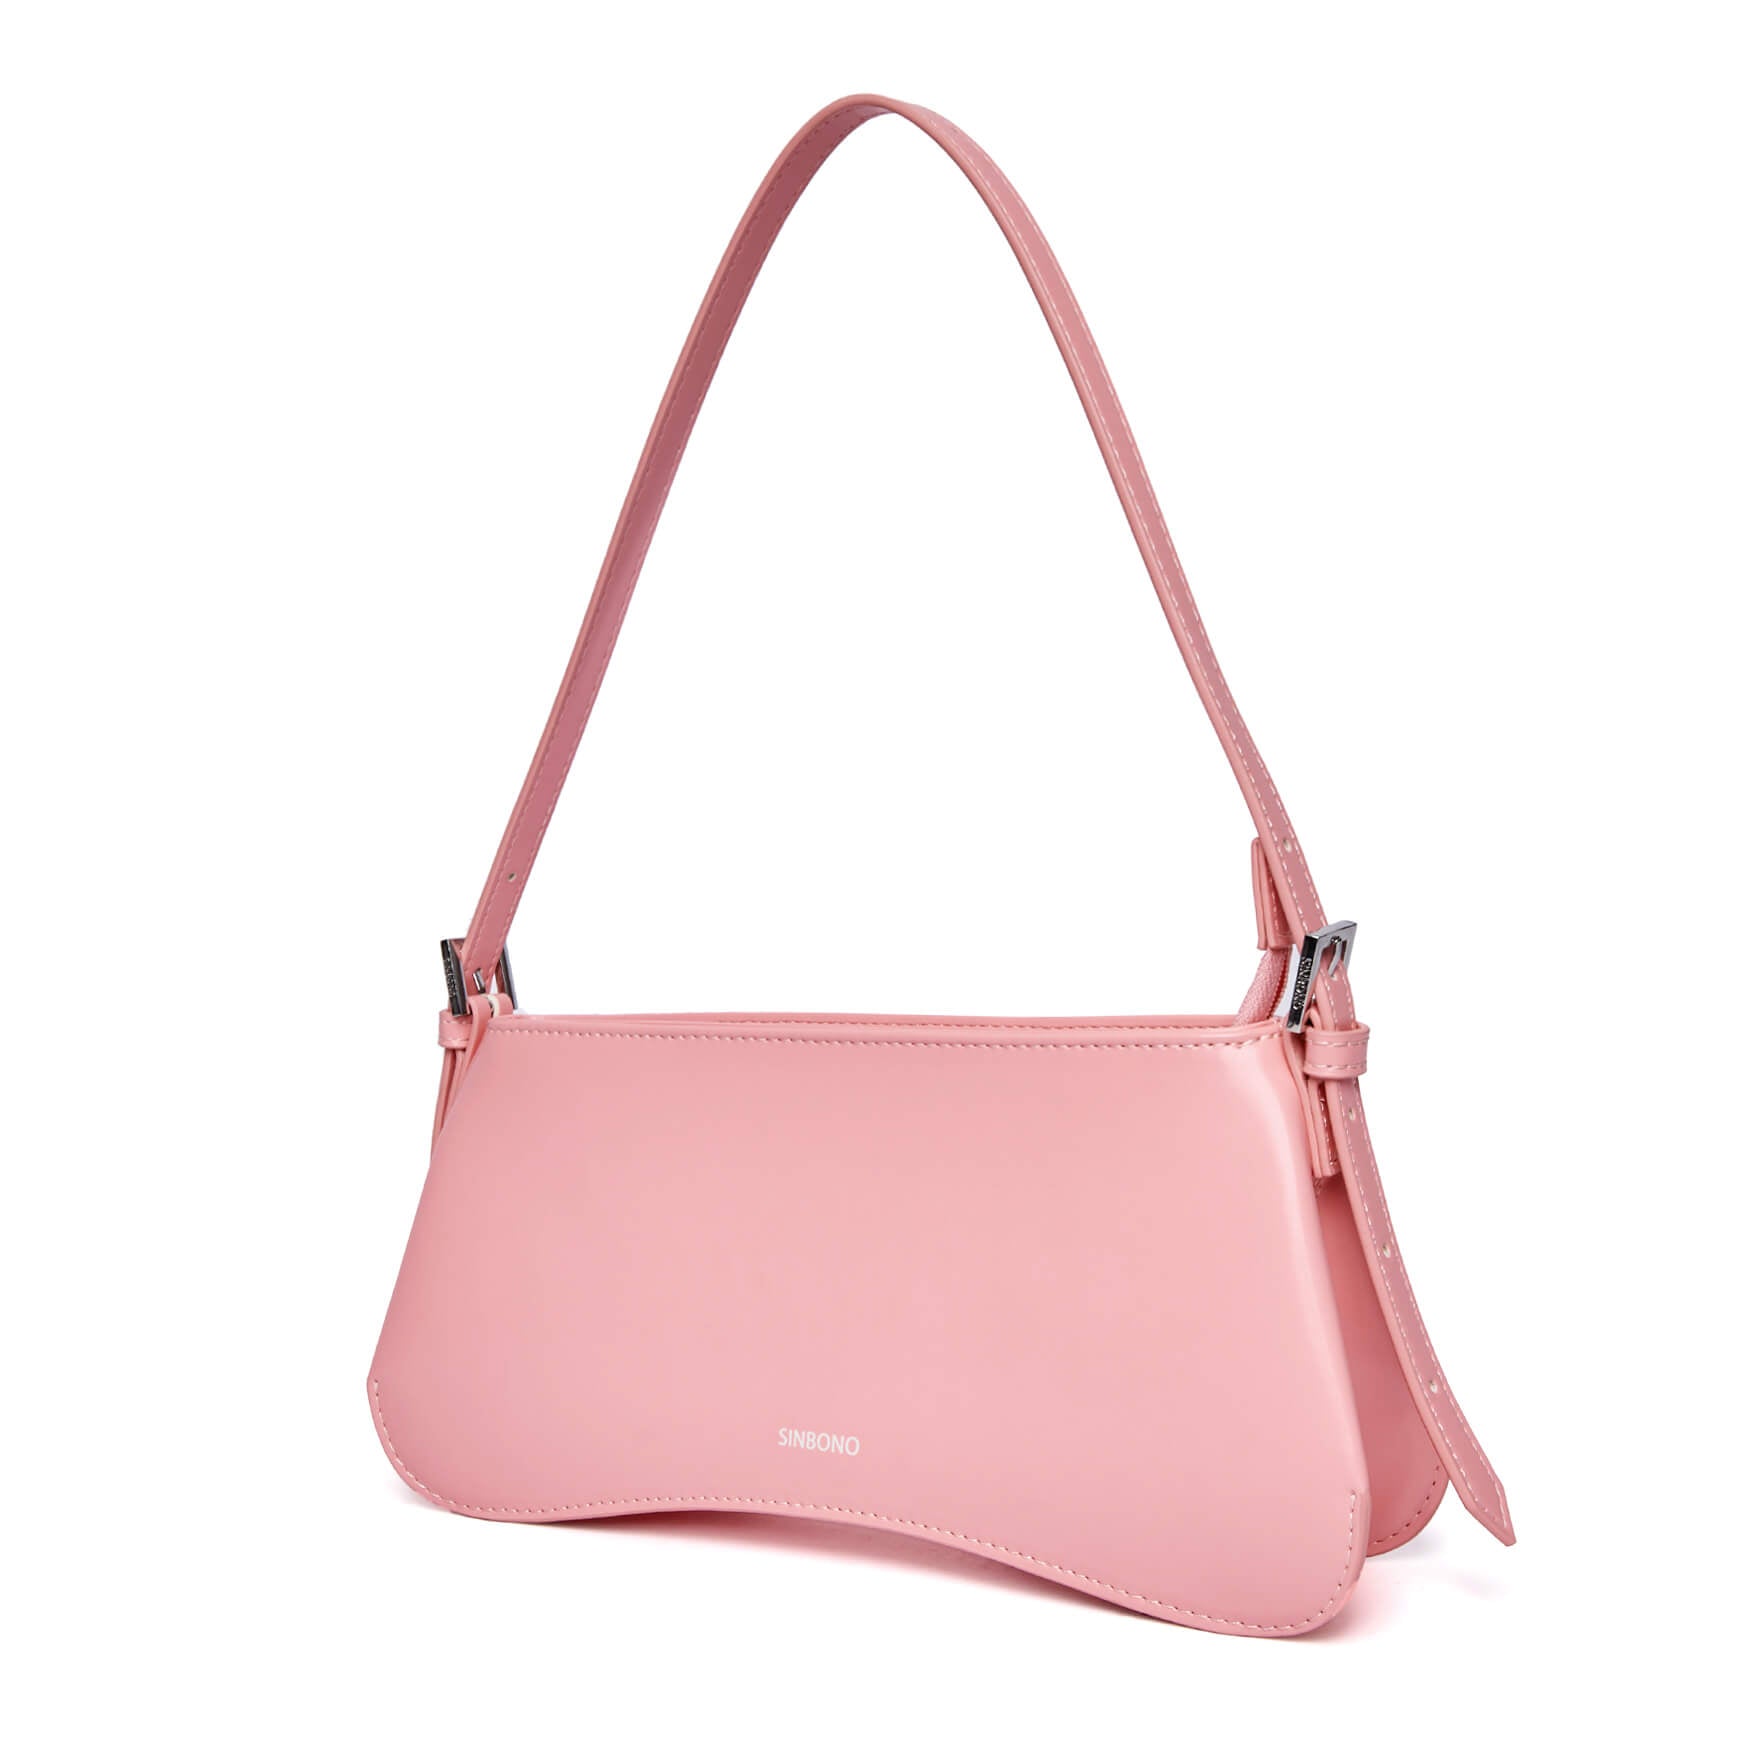 SINBONO Eva Shoulder Bag Pink - Cruelty Free Leather Bag